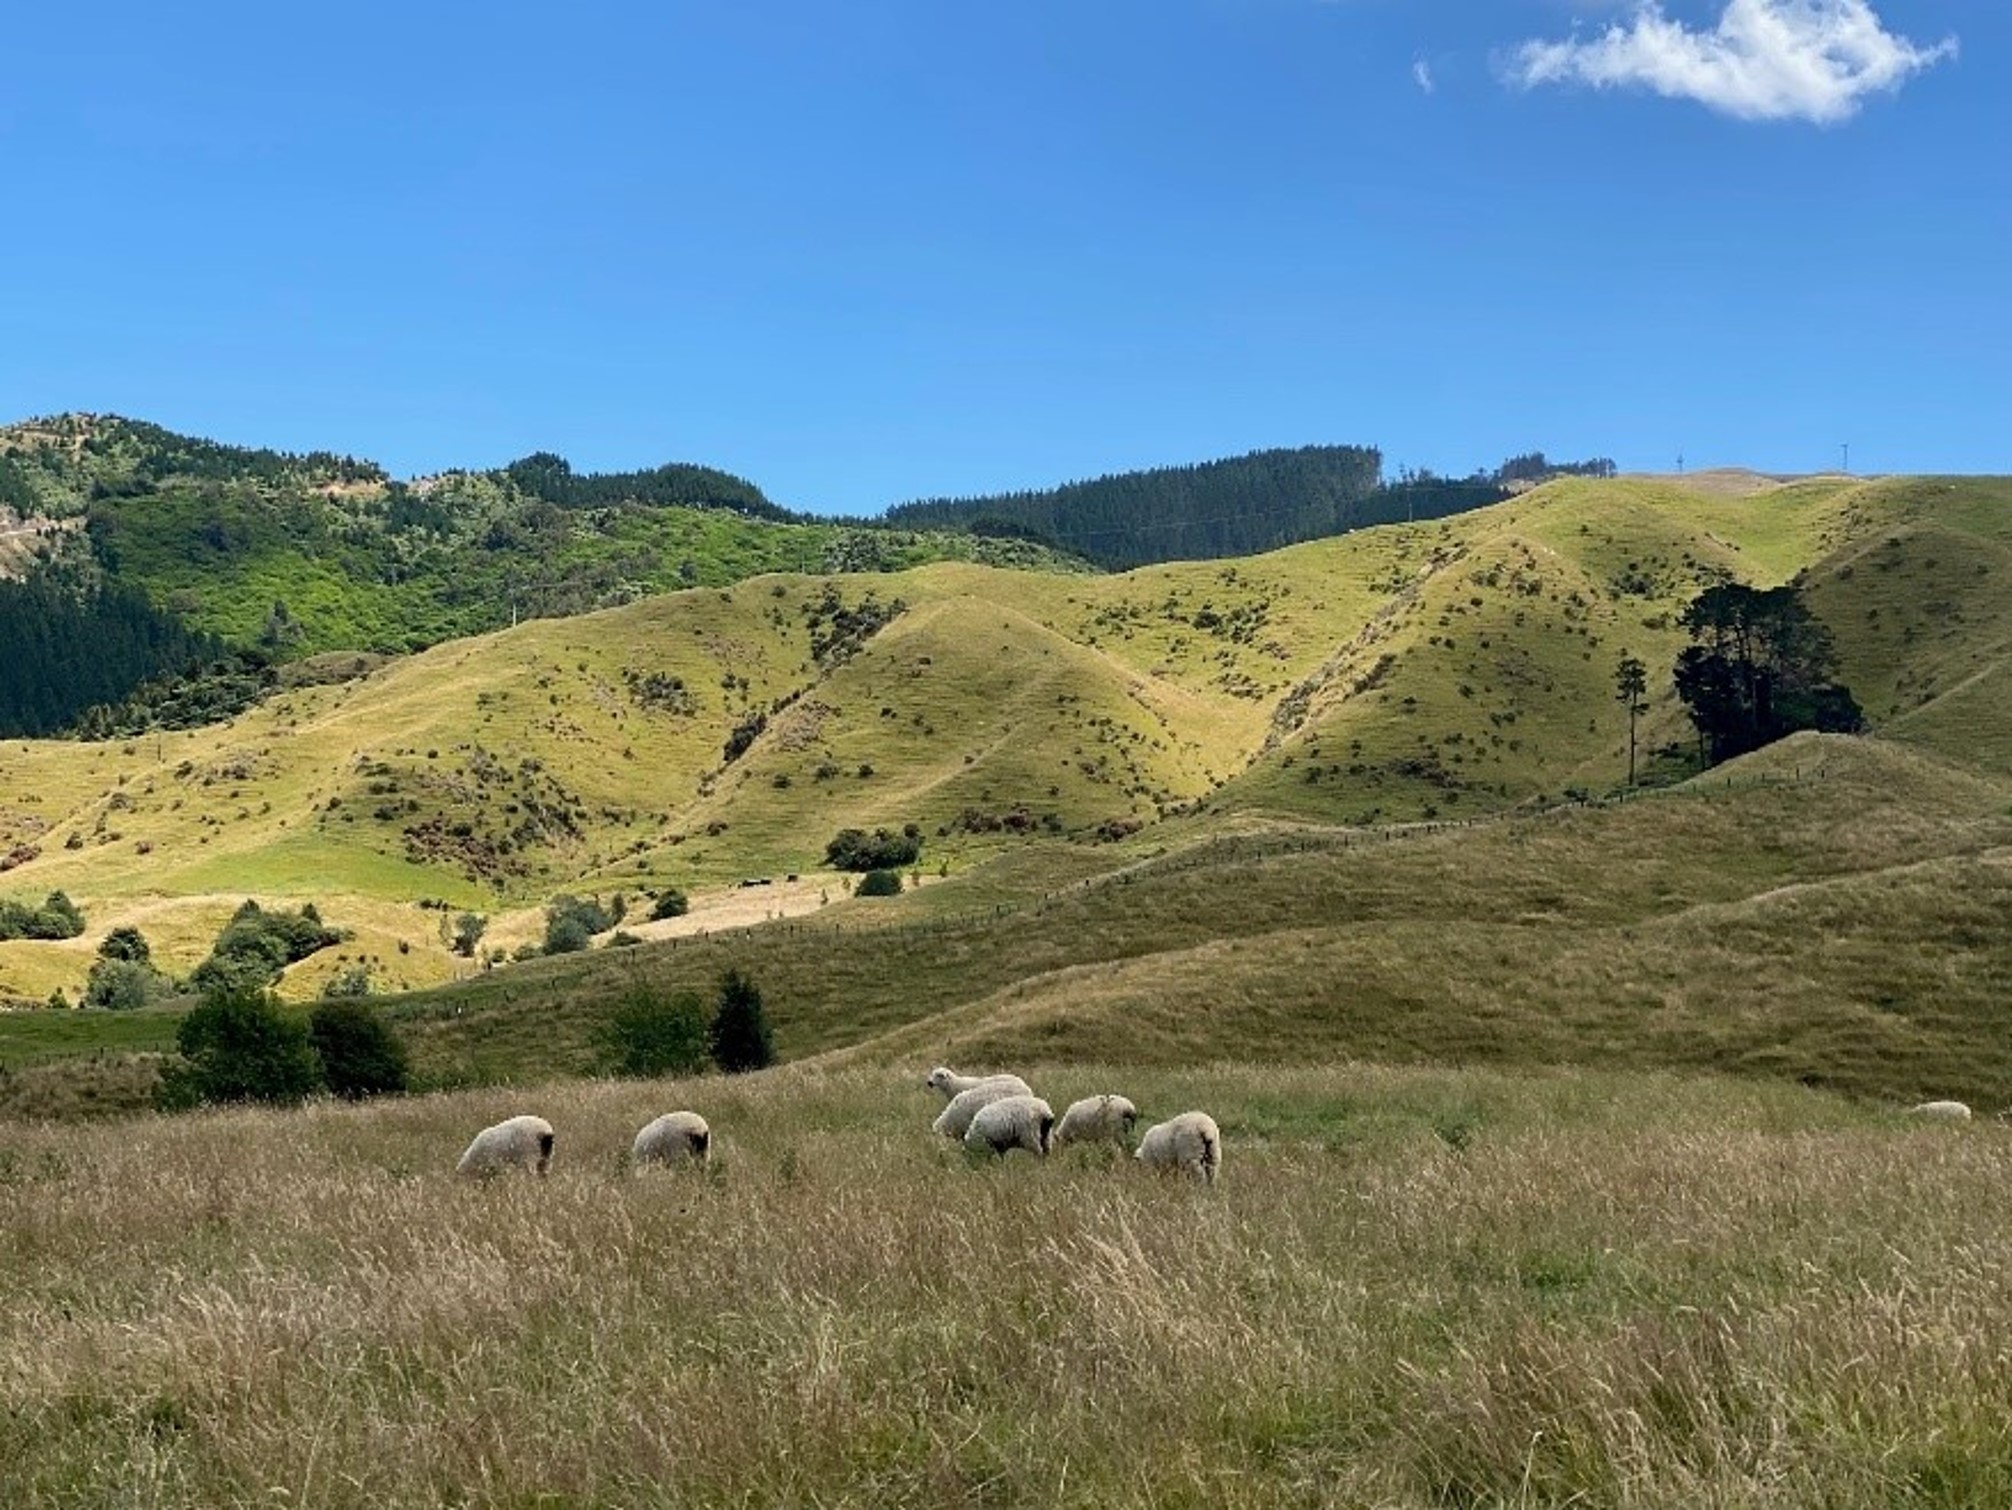 Sheep graze in a field at Battle Hill